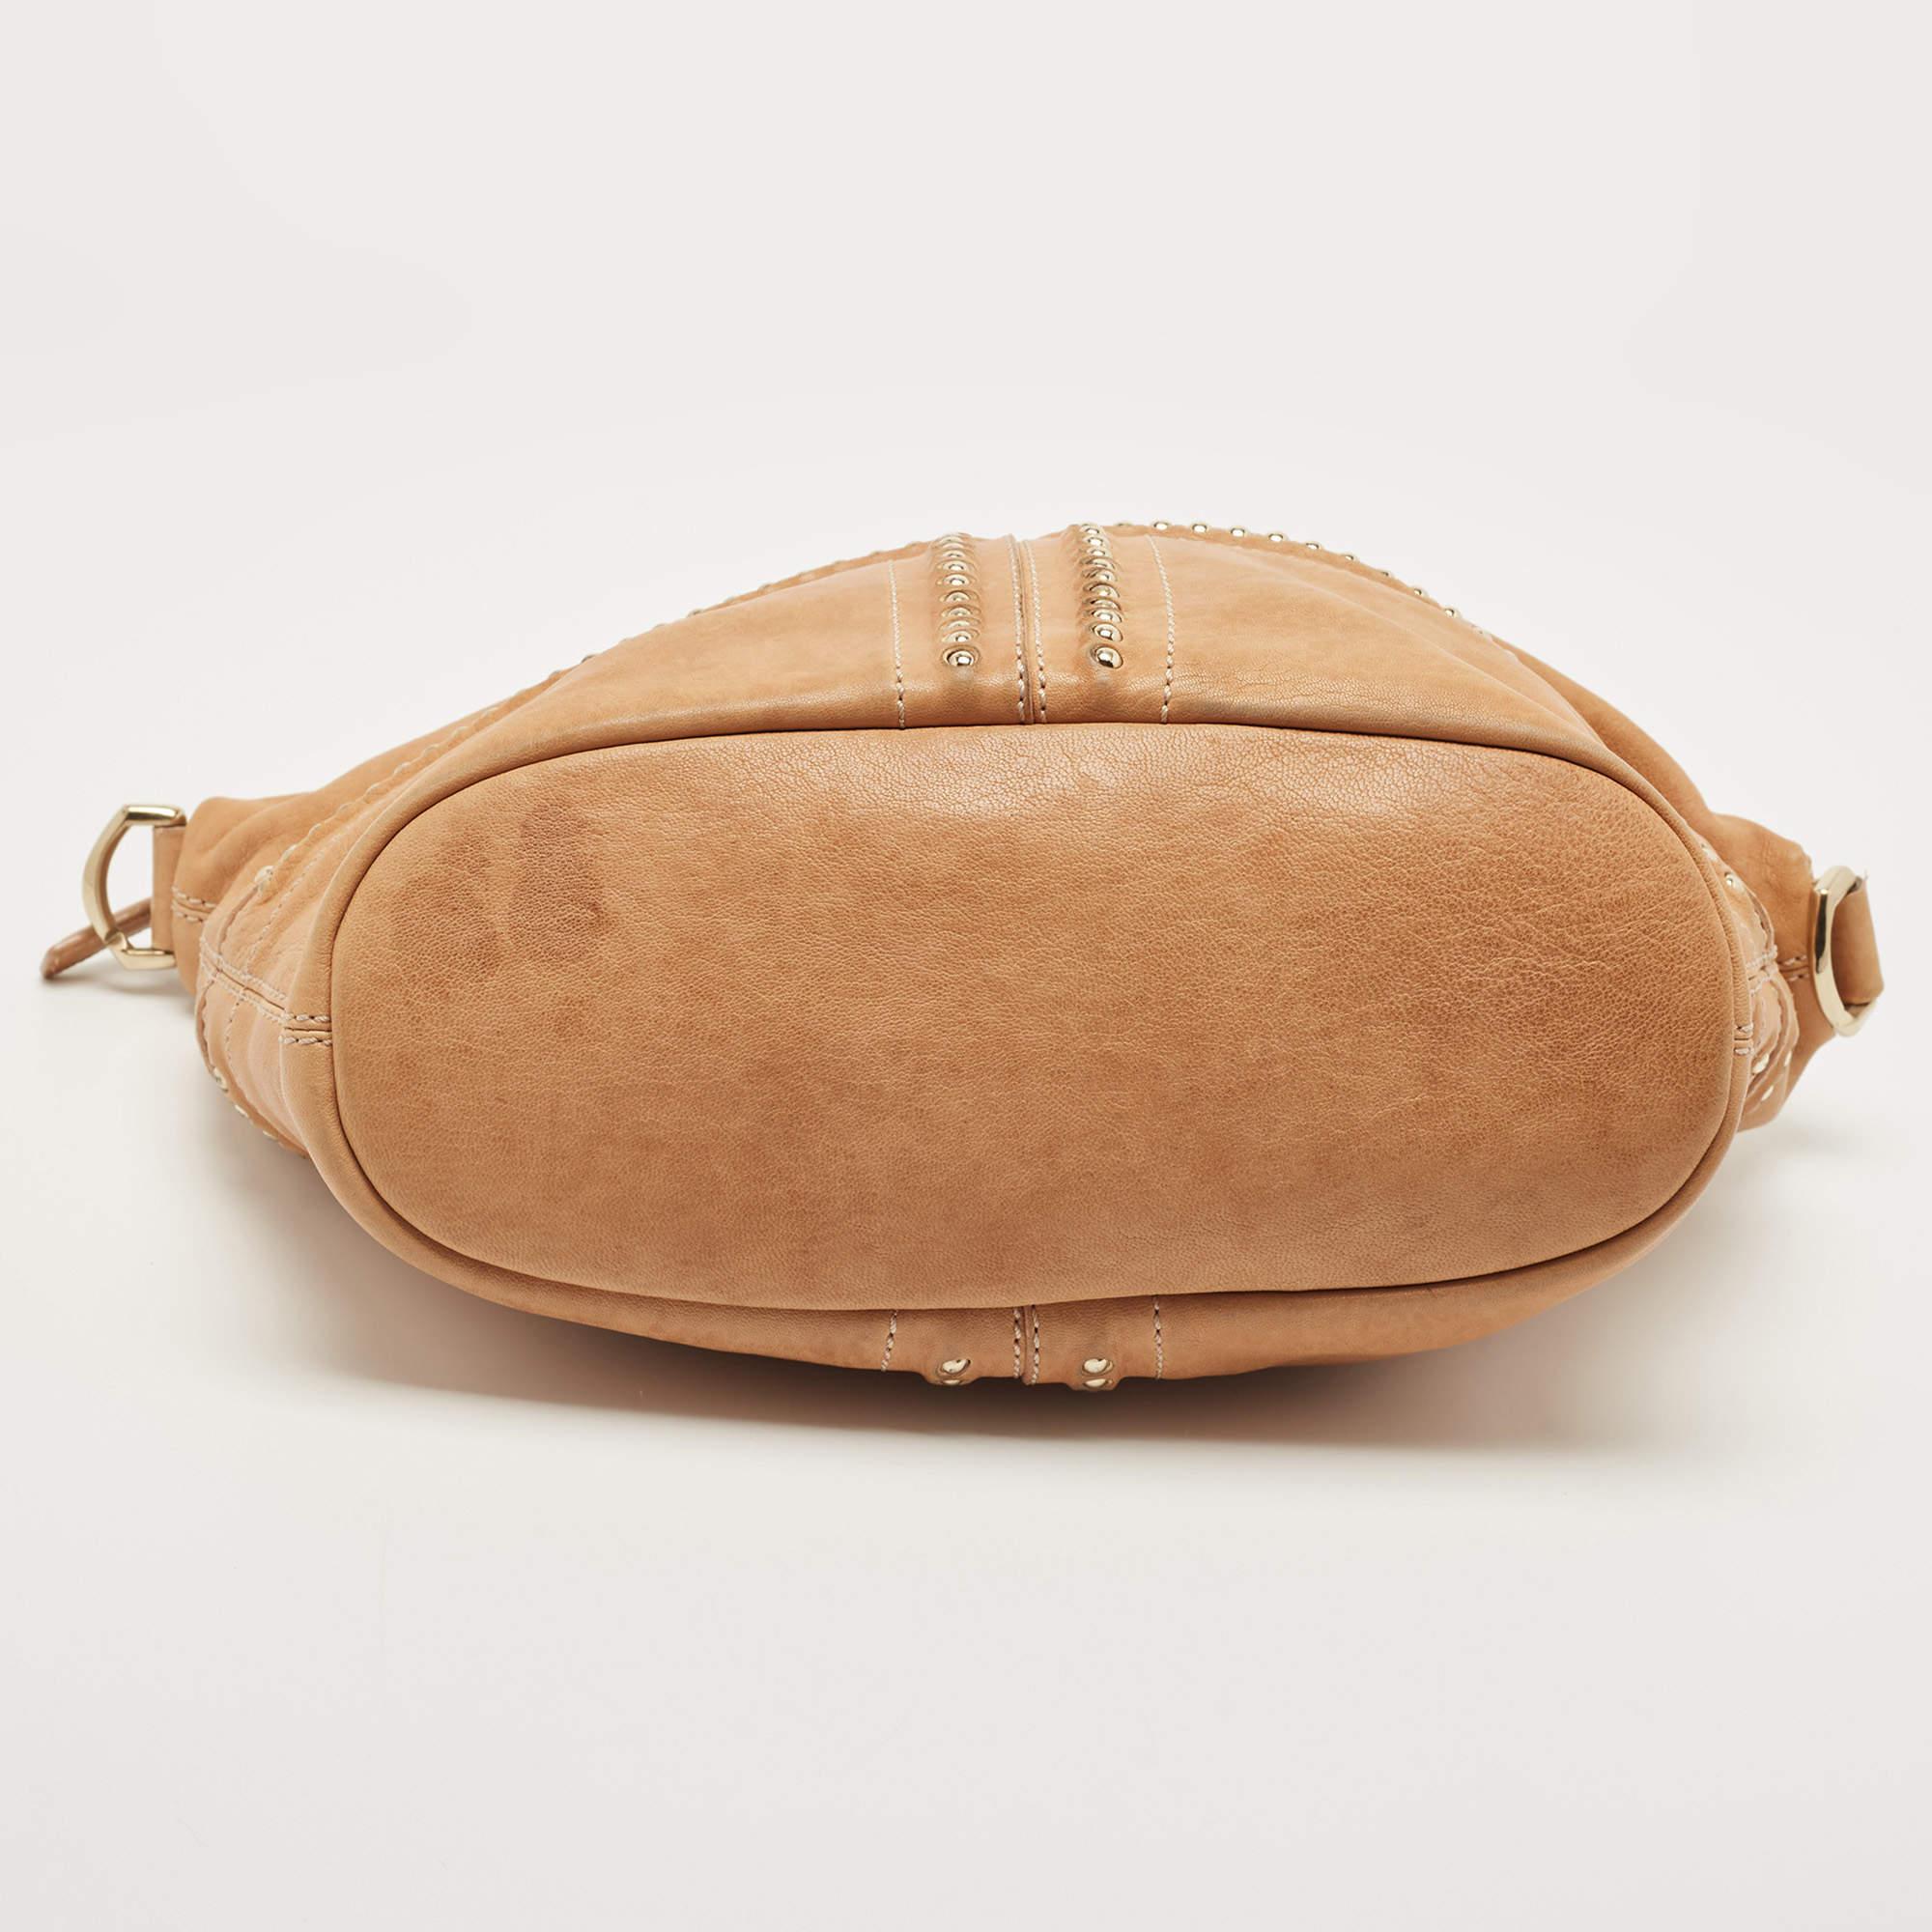 leather studded handbags